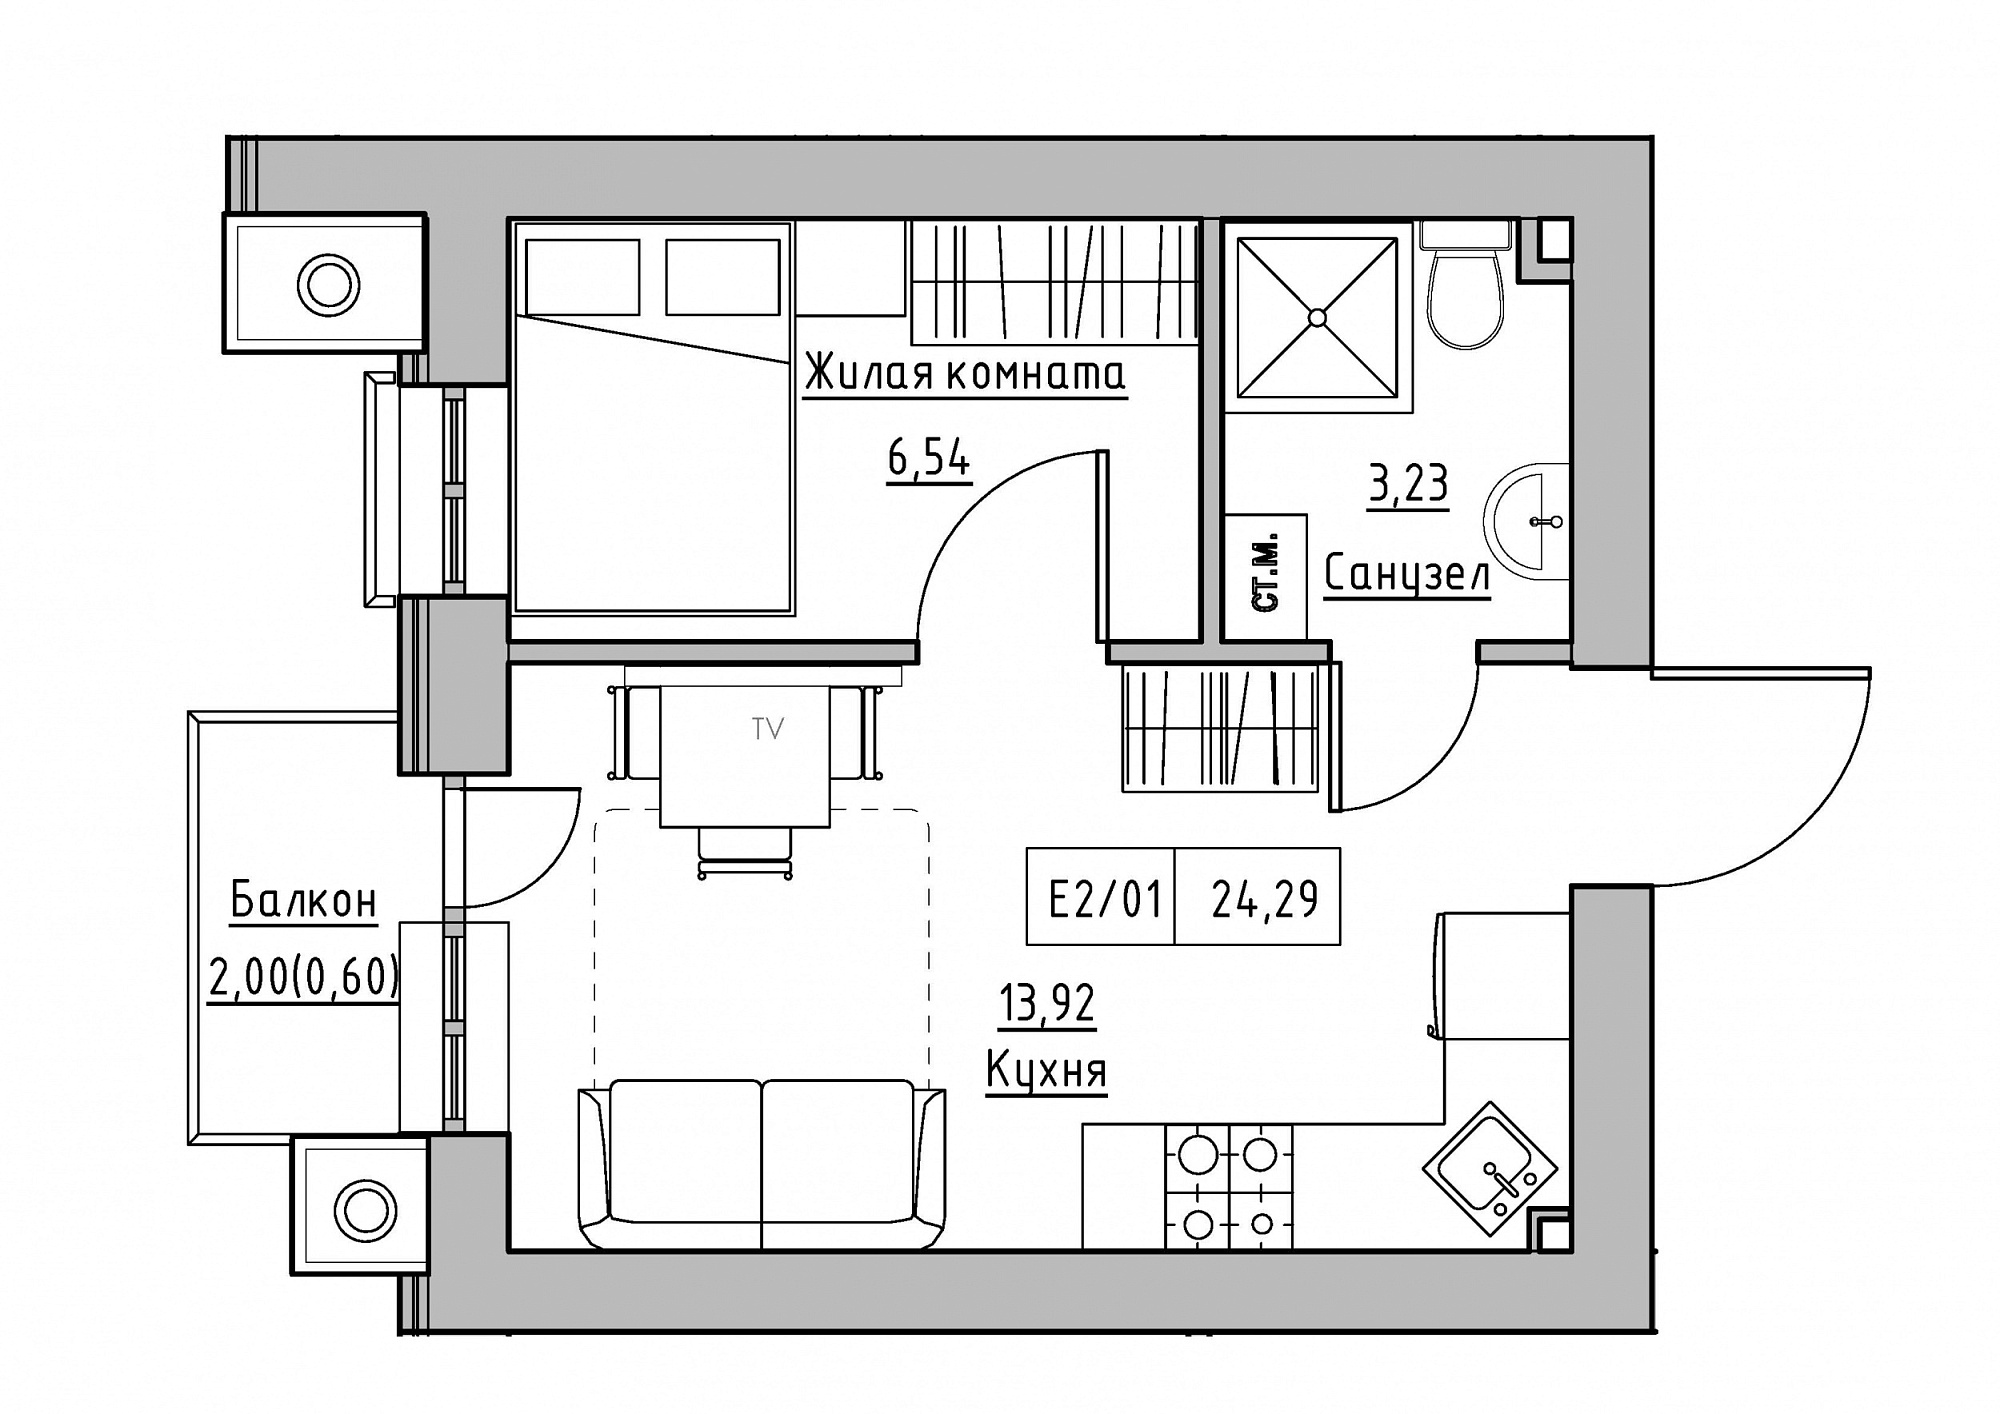 Planning 1-rm flats area 24.29m2, KS-012-02/0009.